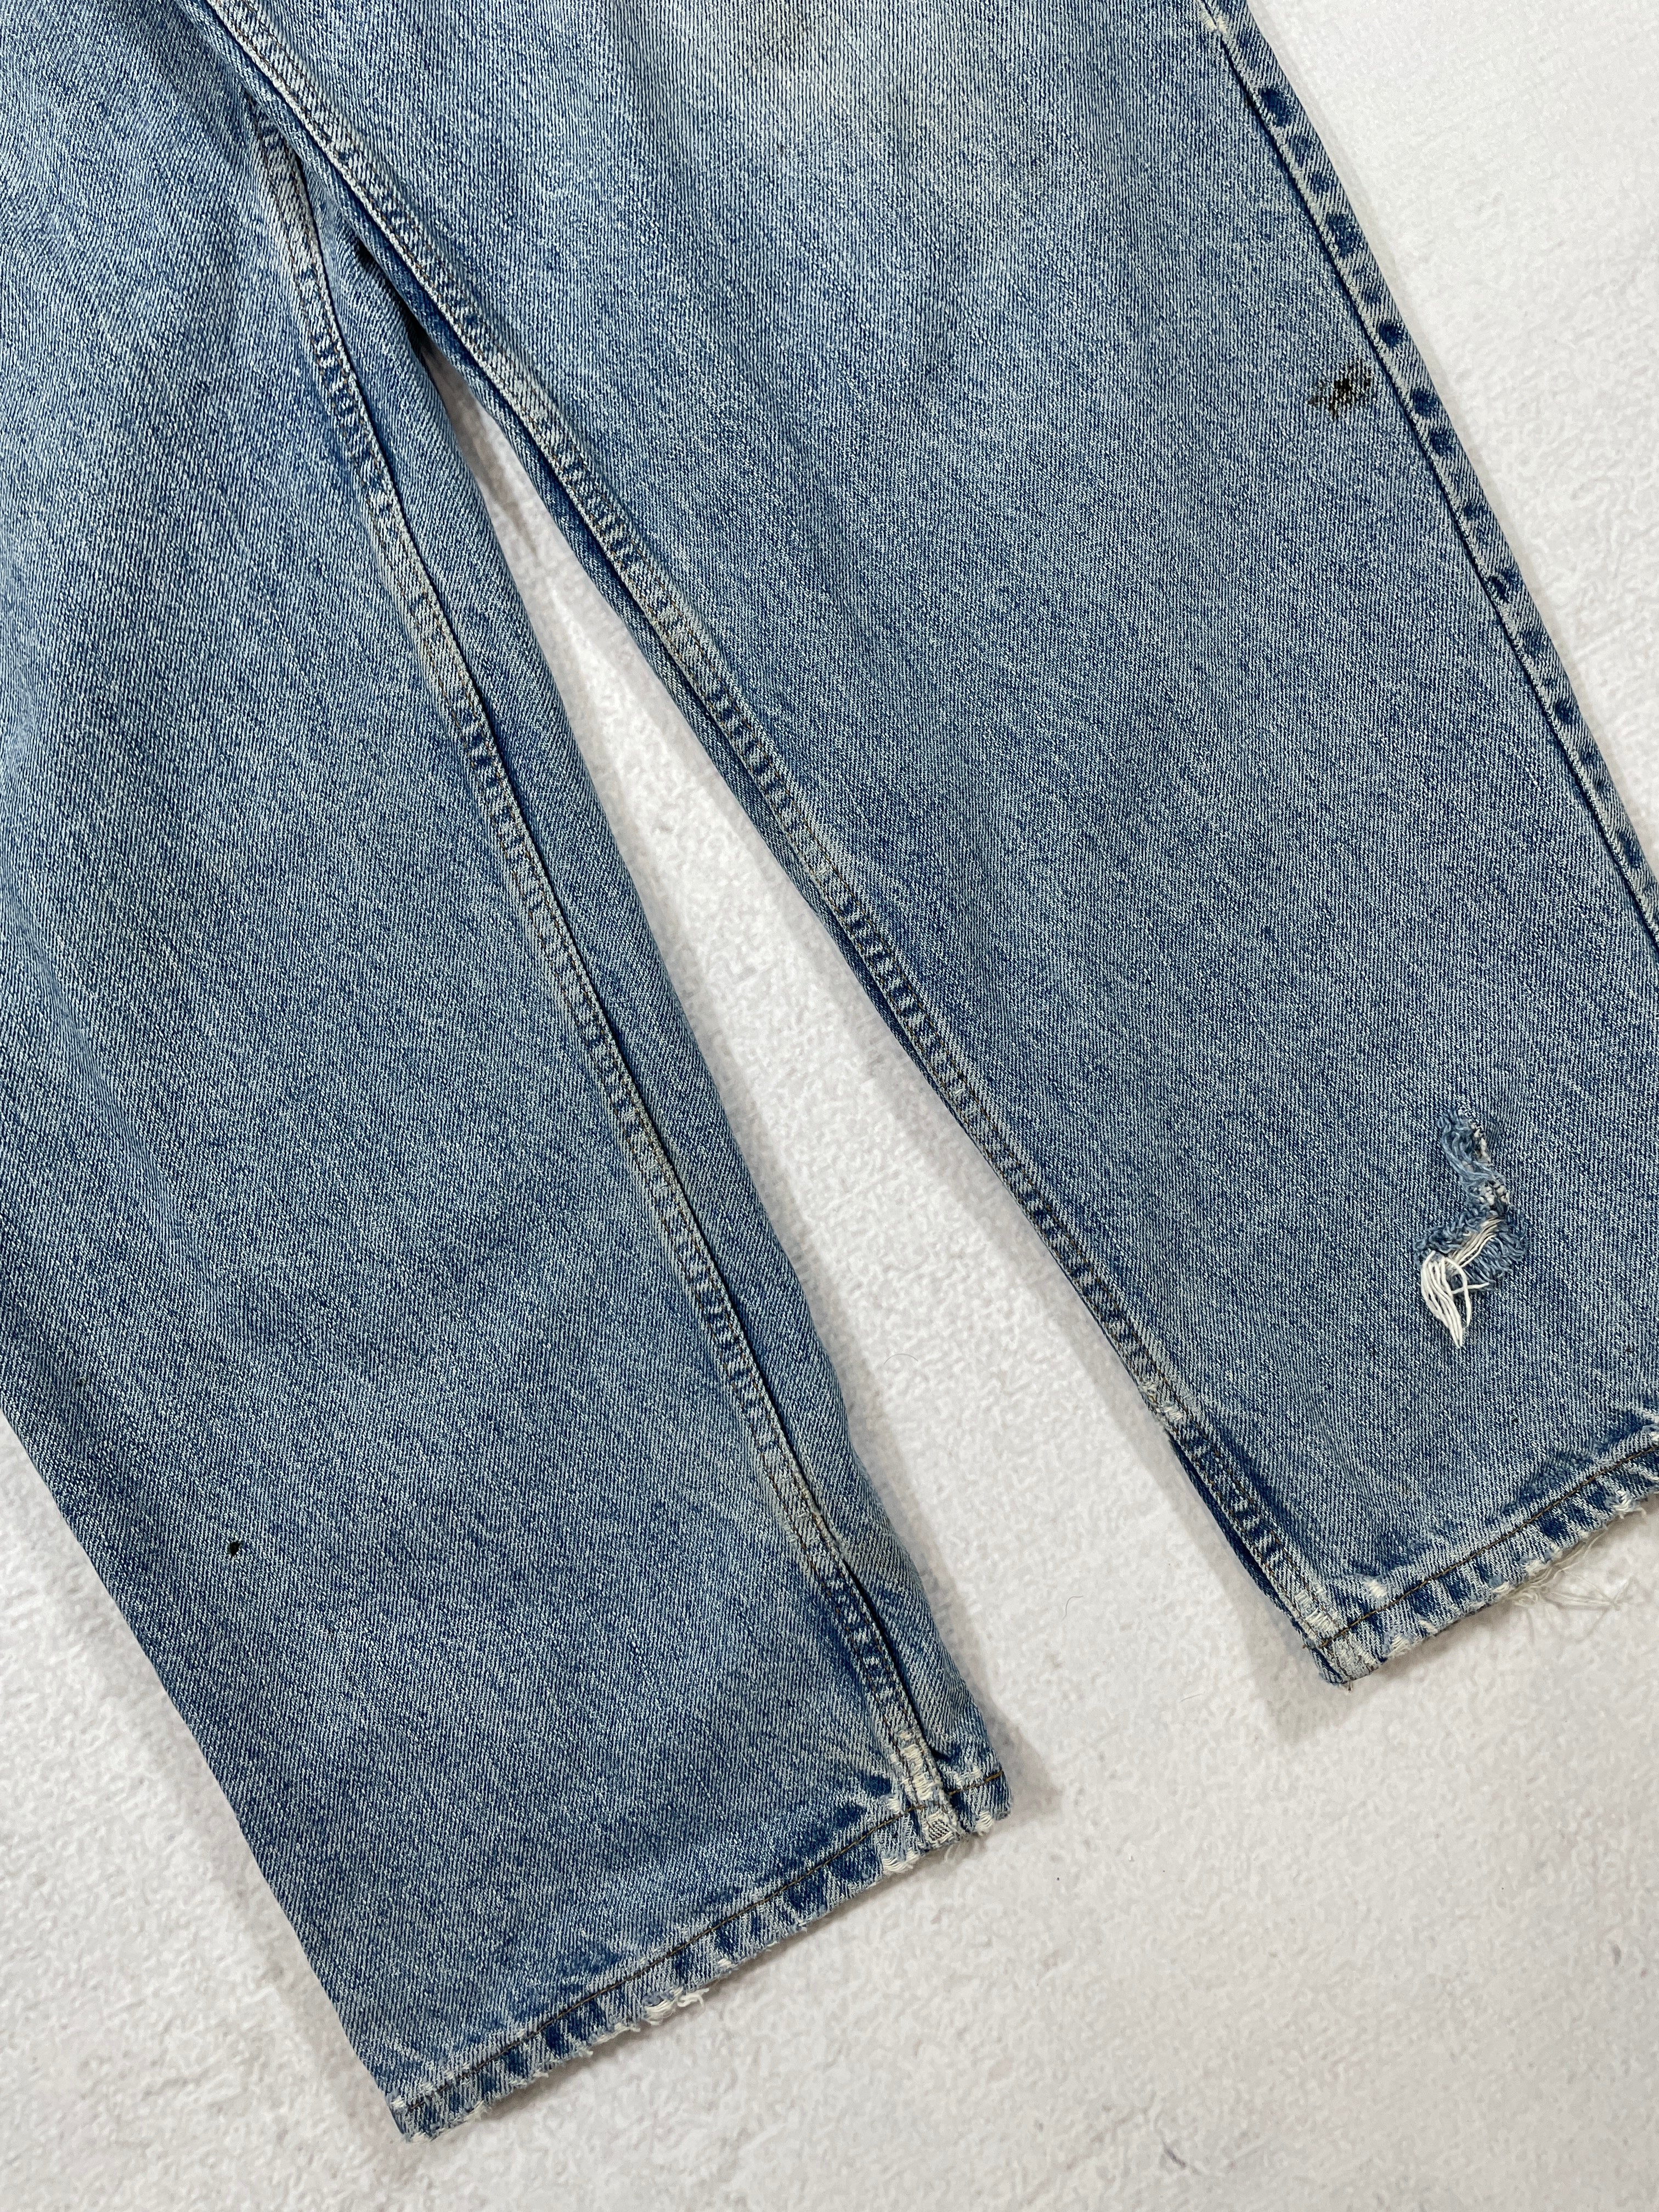 Vintage Tommy Hilfiger Jeans - Men's 38Wx34L